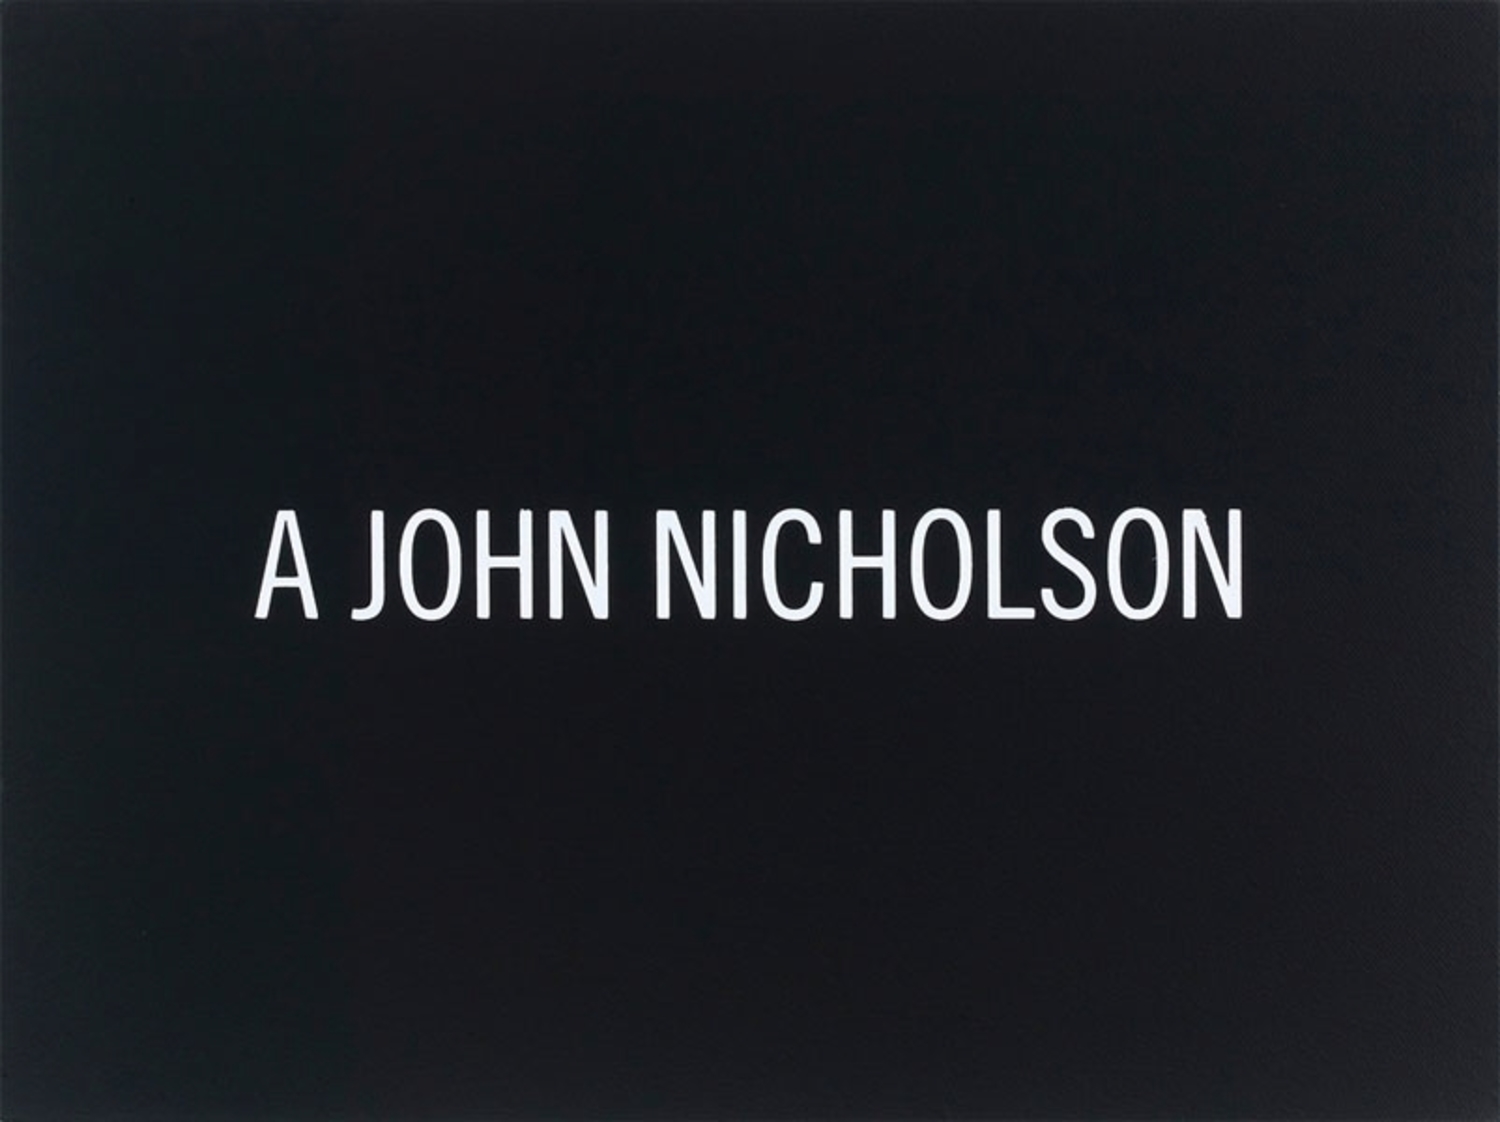 White Box: A John Nicholson